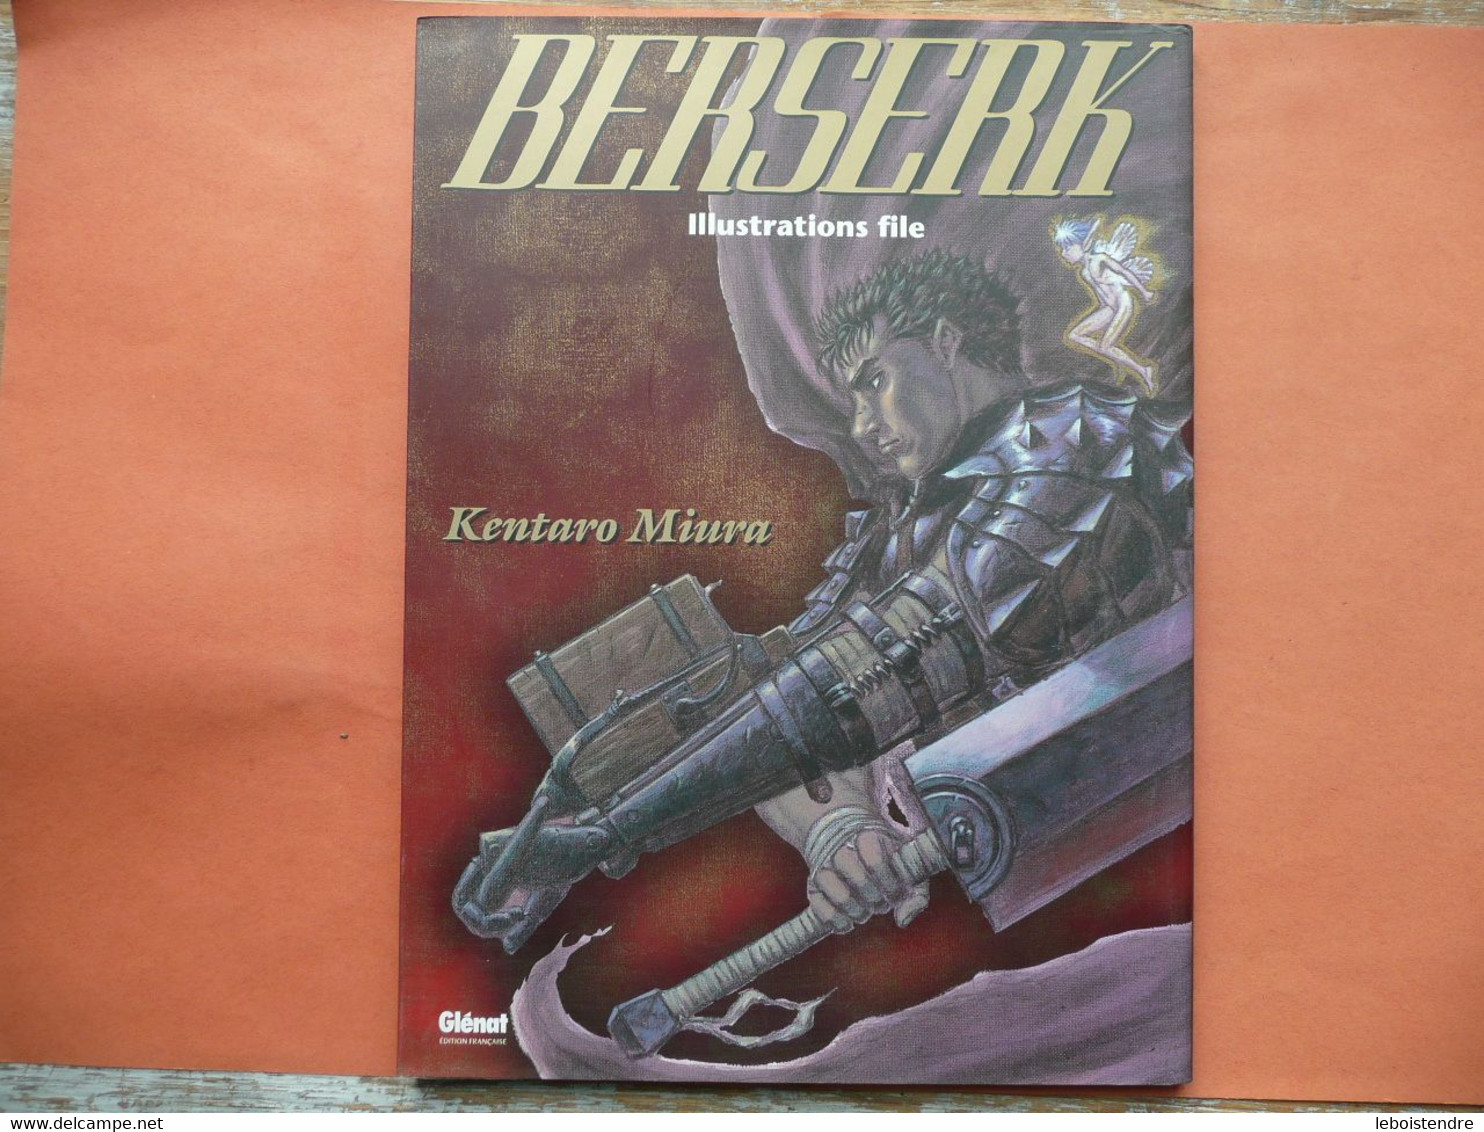 BERSERK ILLUSTRATIONS FILE KENTARO MIURA 2009 GLENAT LIVRE SUR CETTE SERIE MEDIEVALE FANTASTIQUE EN MANGA - Press Books